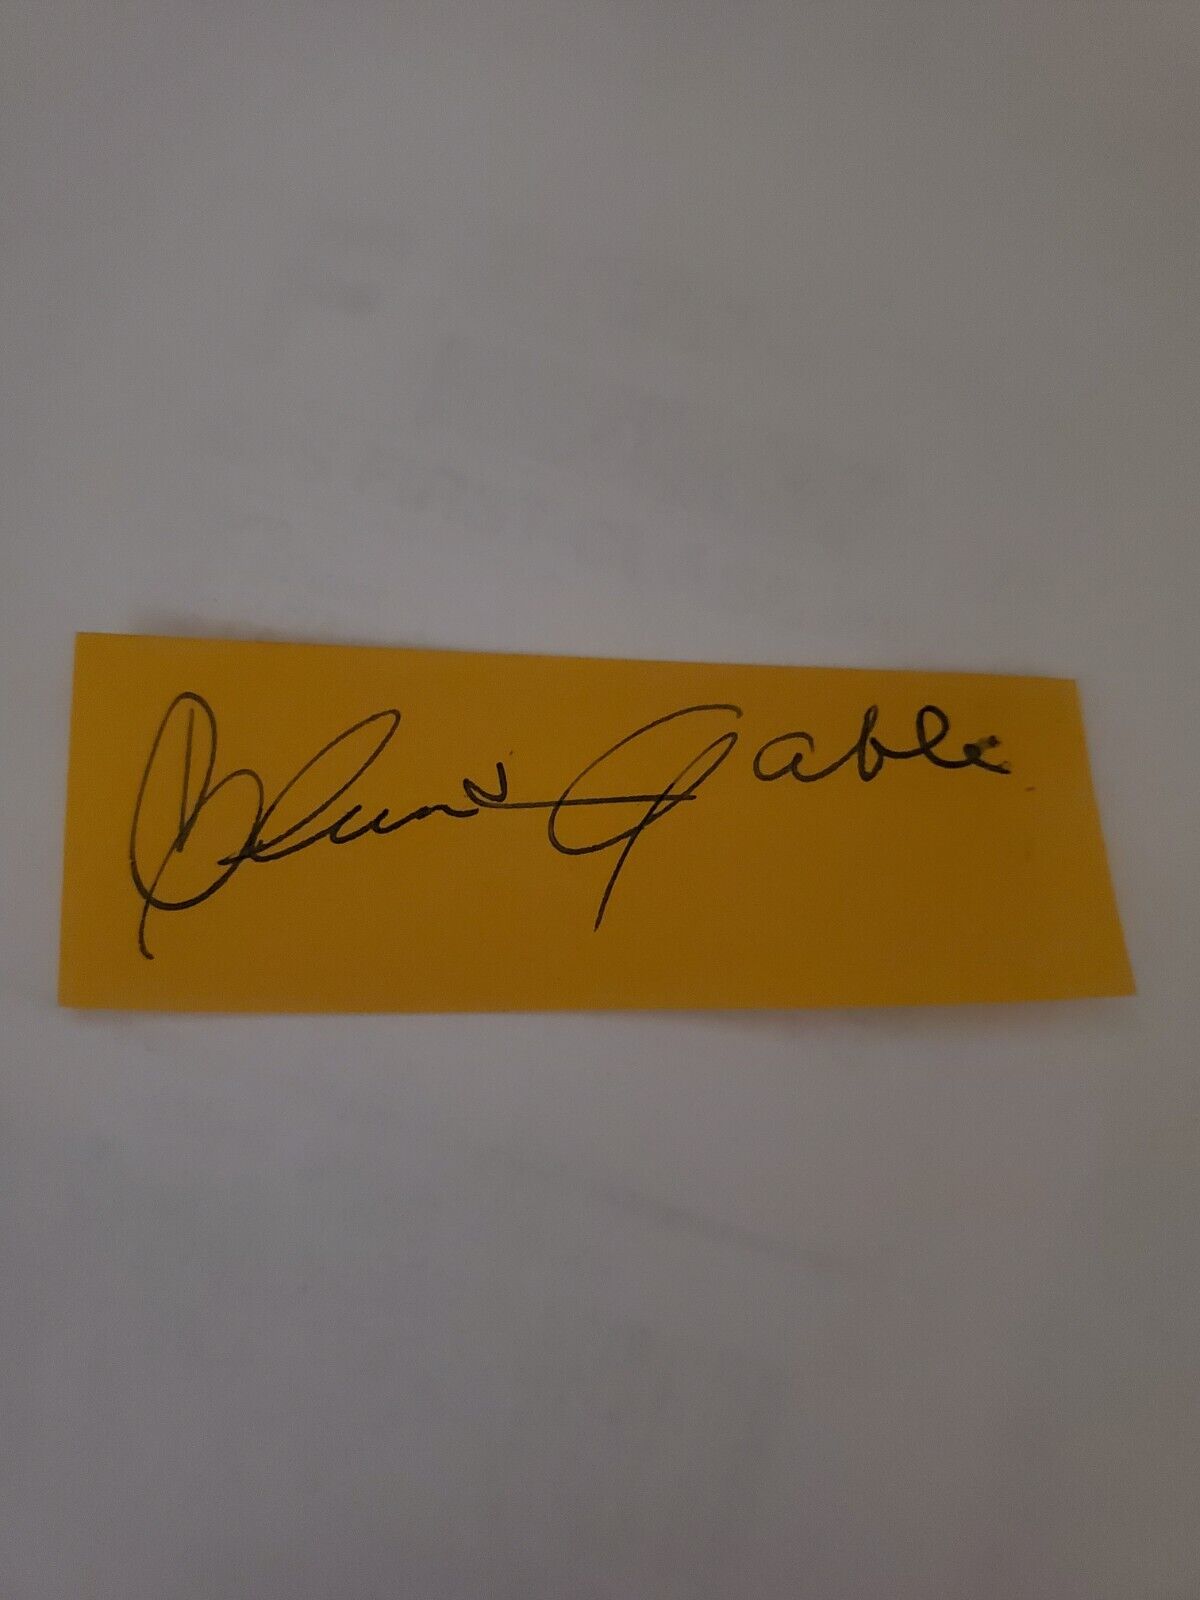 Clark Gable Autograph